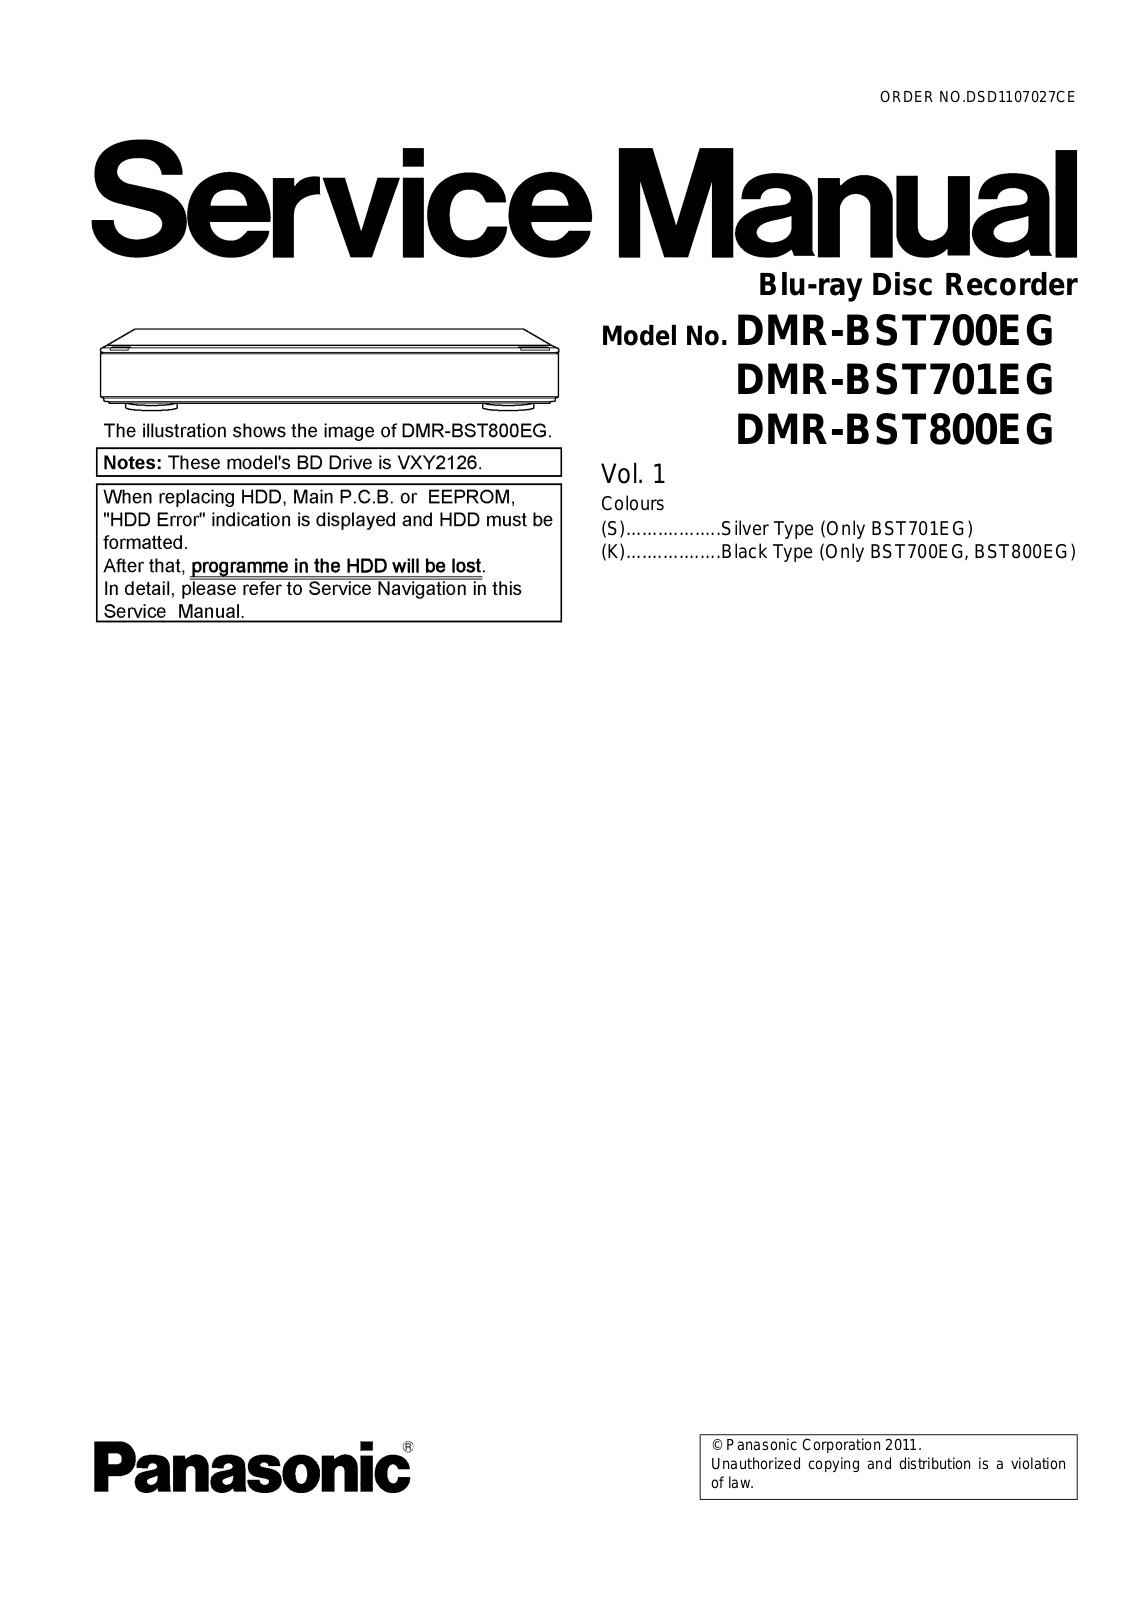 Panasonic DMR-BST700EG, DMR-BST701EG, DMR-BST800EG Service Manual